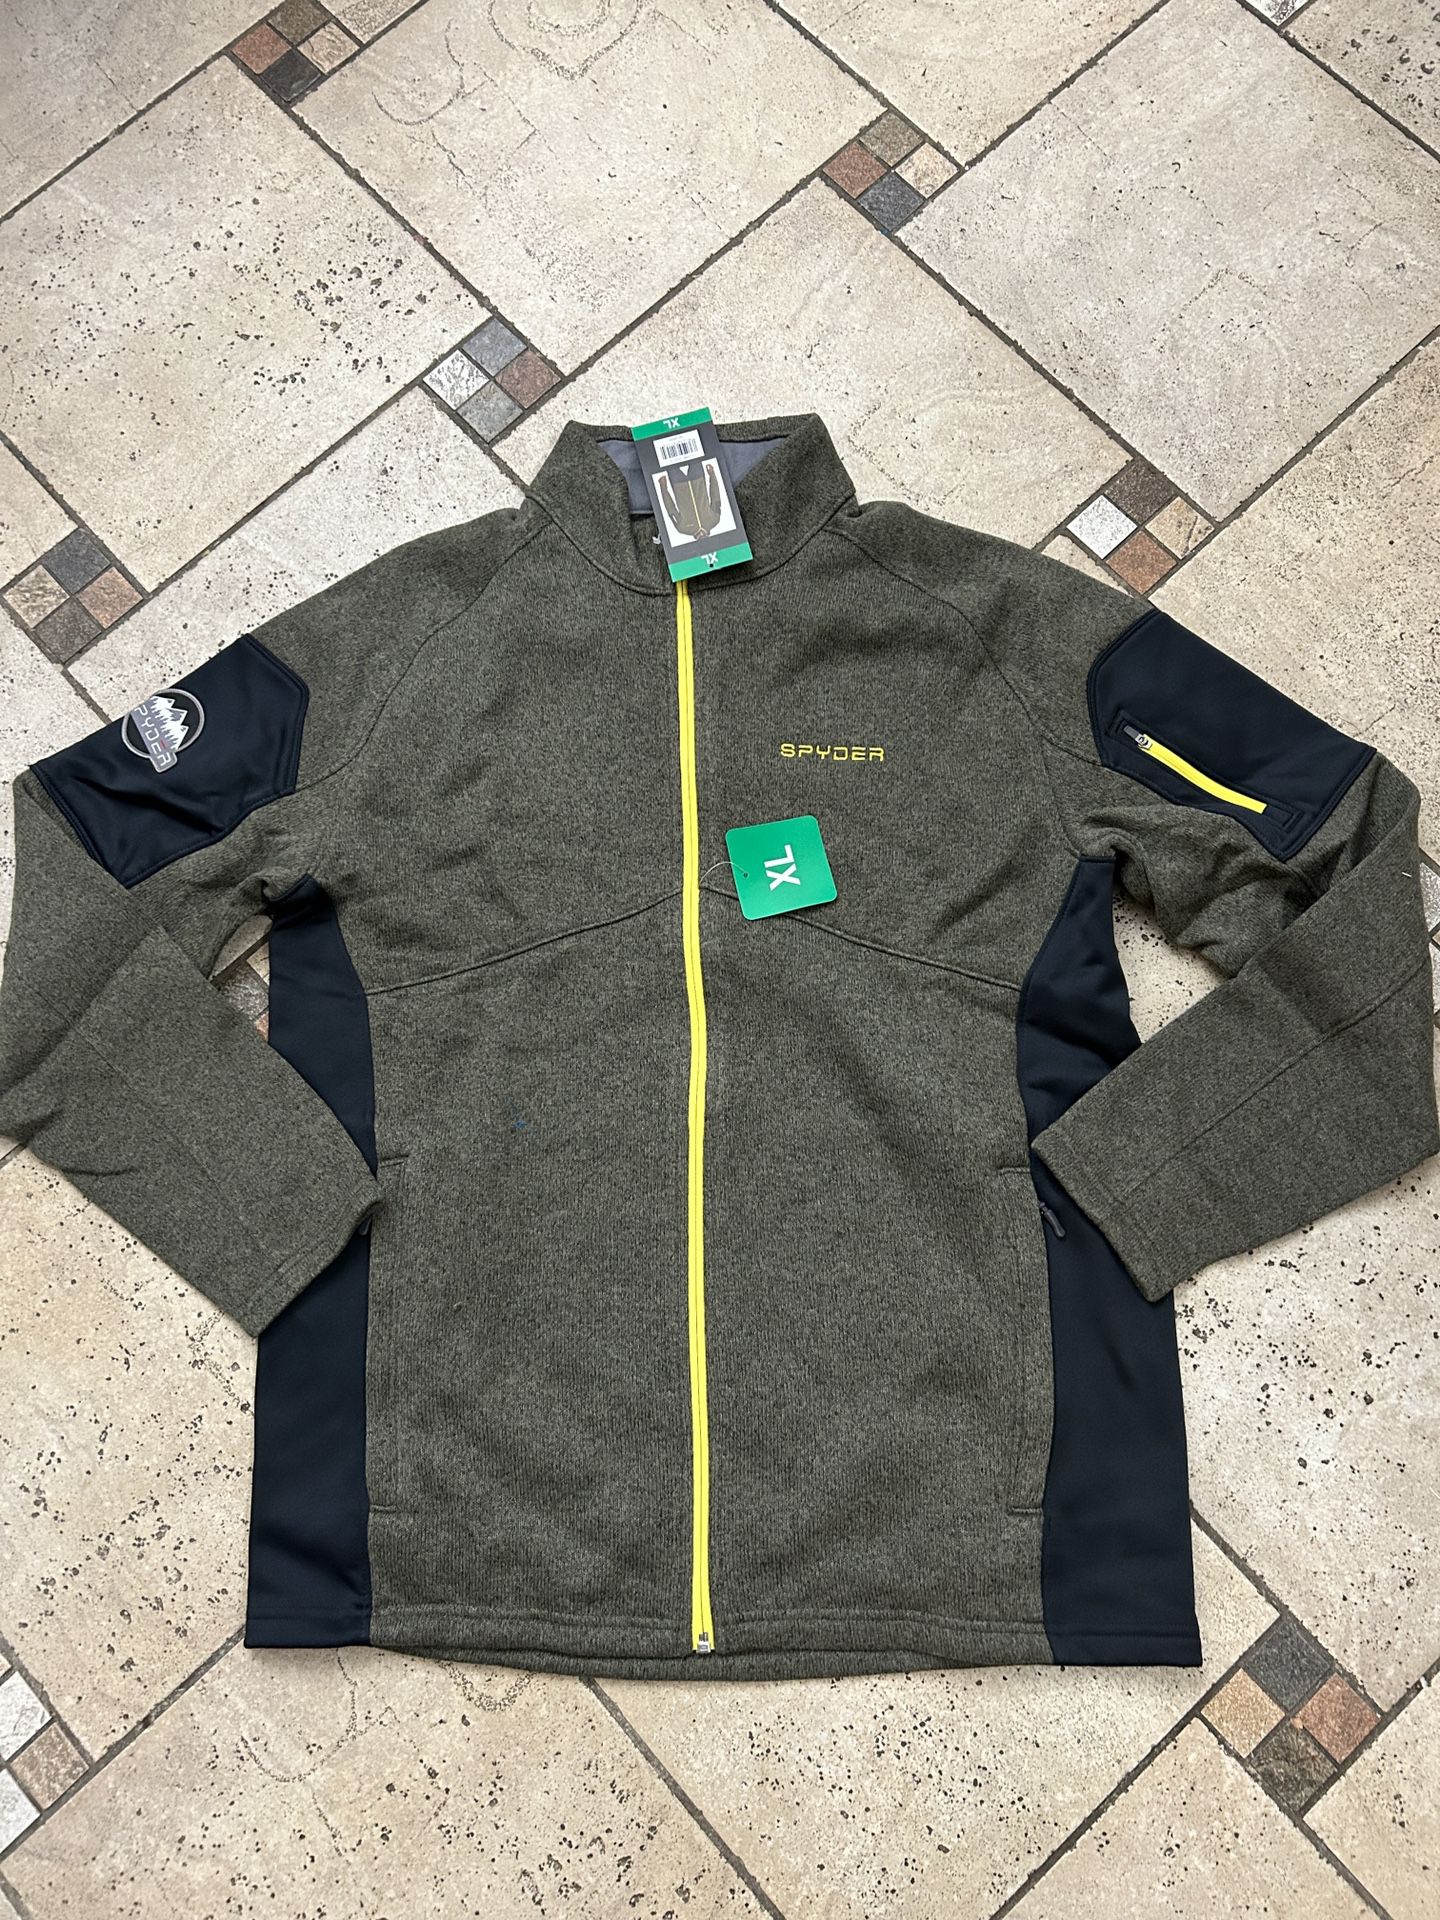 NWT Spyder men’s full zip fleece jacket size XL green